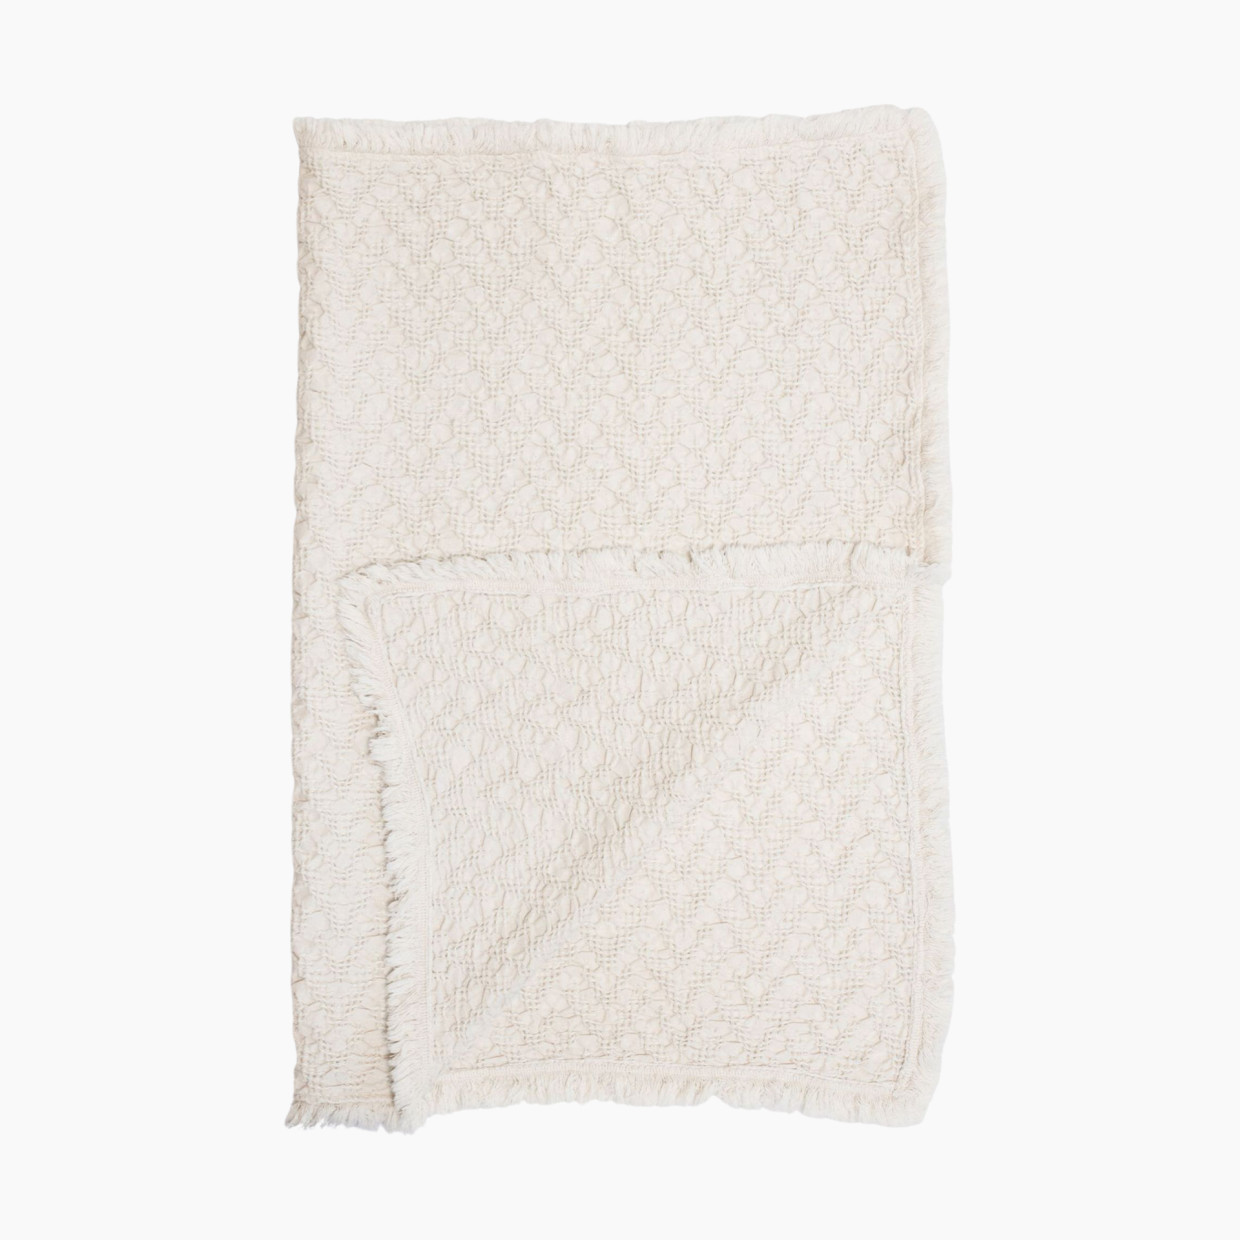 Crane Baby Boho Knit Blanket - Oatmeal.